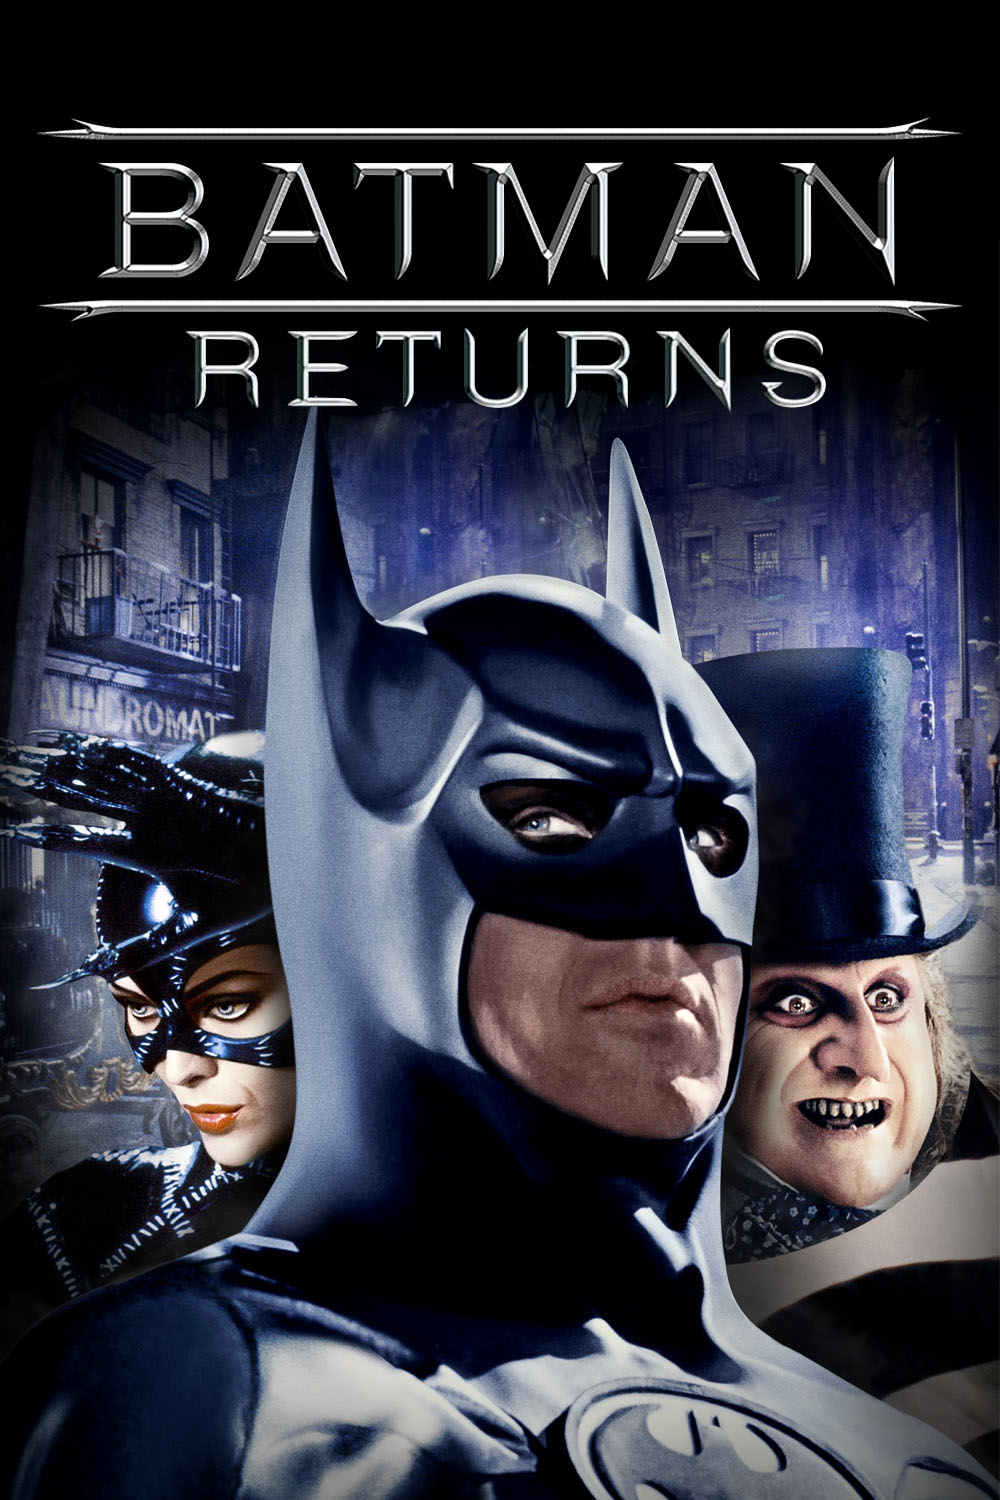 Batman Returns (1992) by sithlord38 on DeviantArt